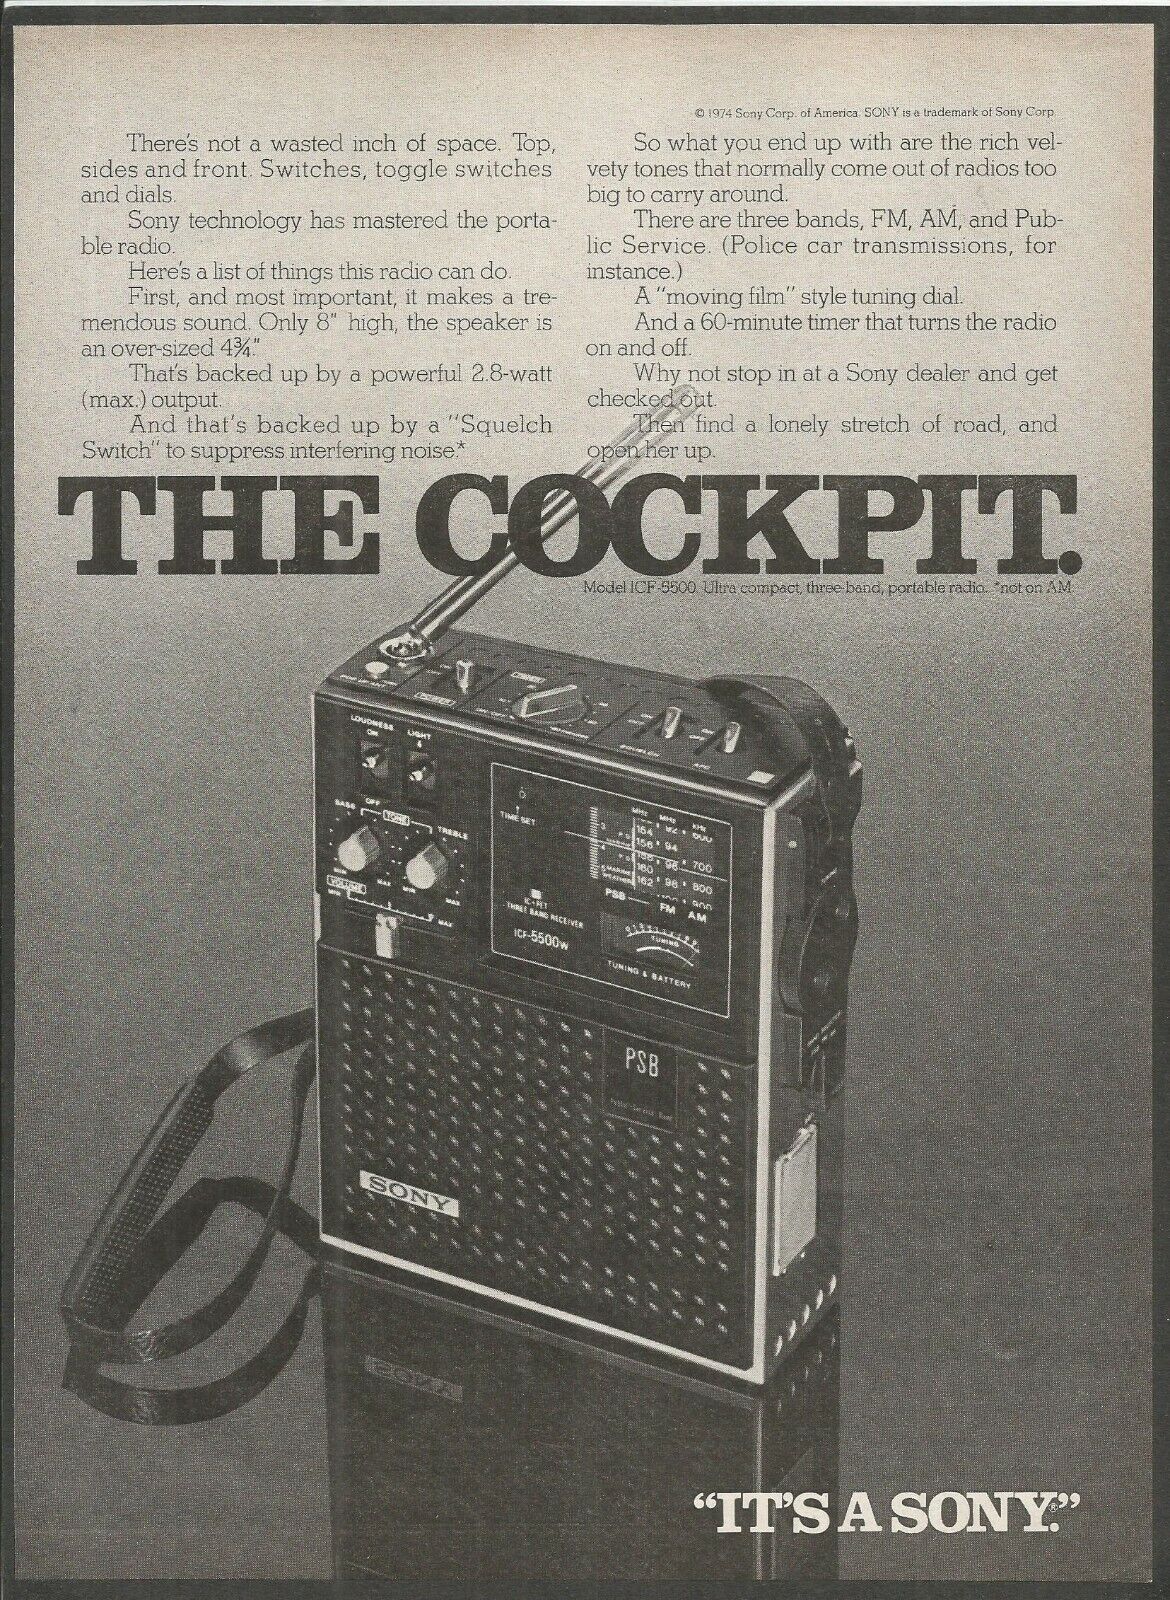 SONY ICF-5500 Ultra Compact Portable Radio - THE COCKPIT - 1974 Vintage Print Ad